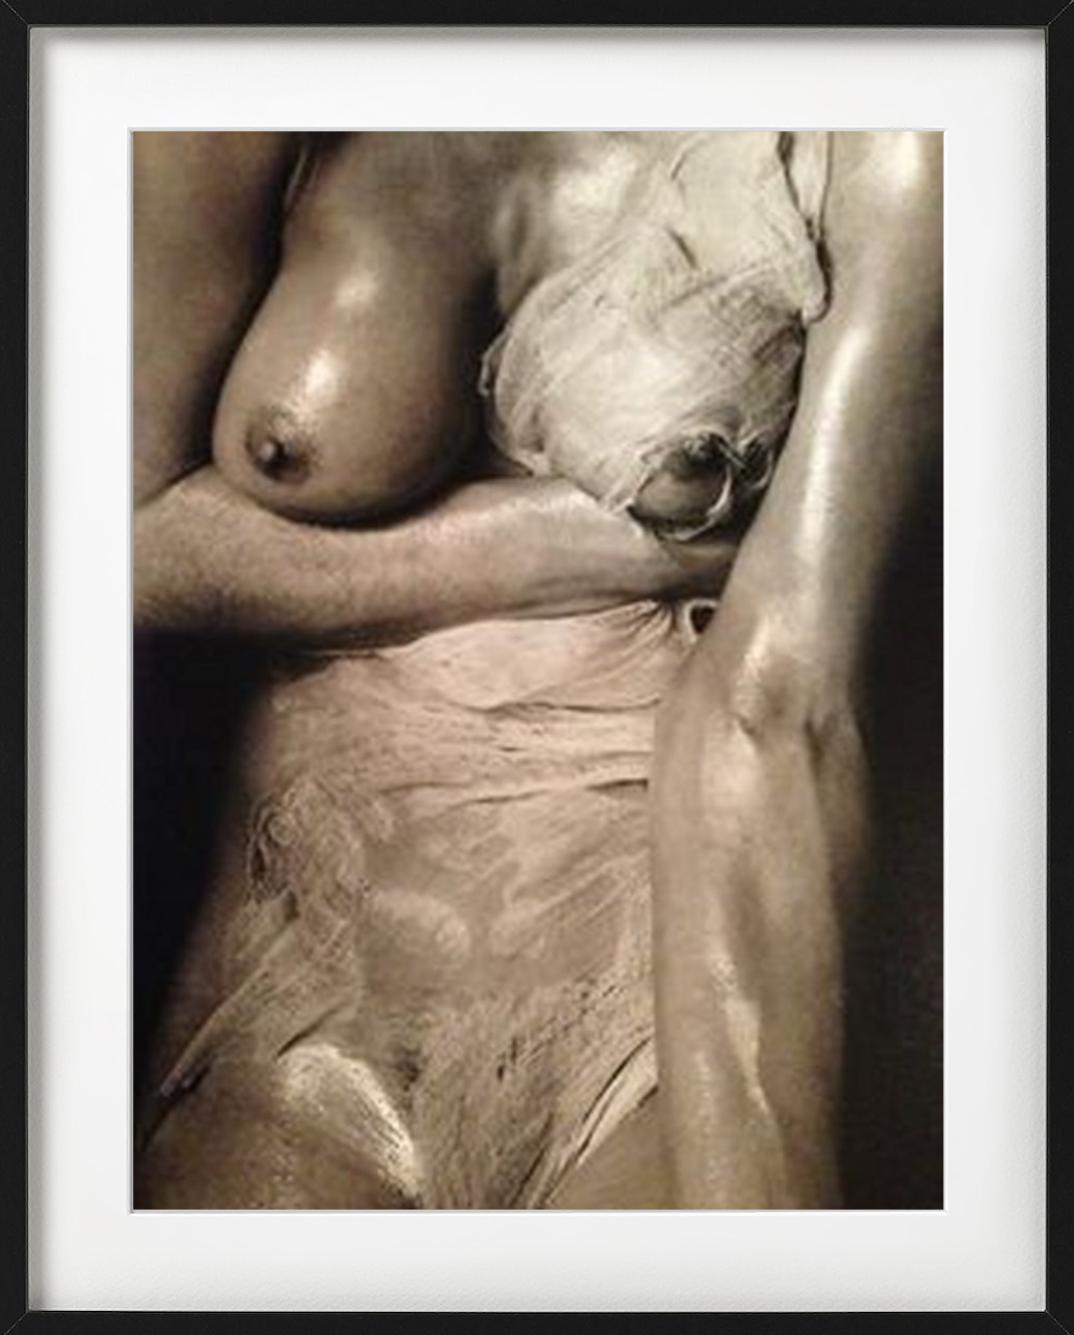 Rachel Williams – nackter Torso aus gerafftem Stoff, Kunstfotografie 1995 – Photograph von Albert Watson